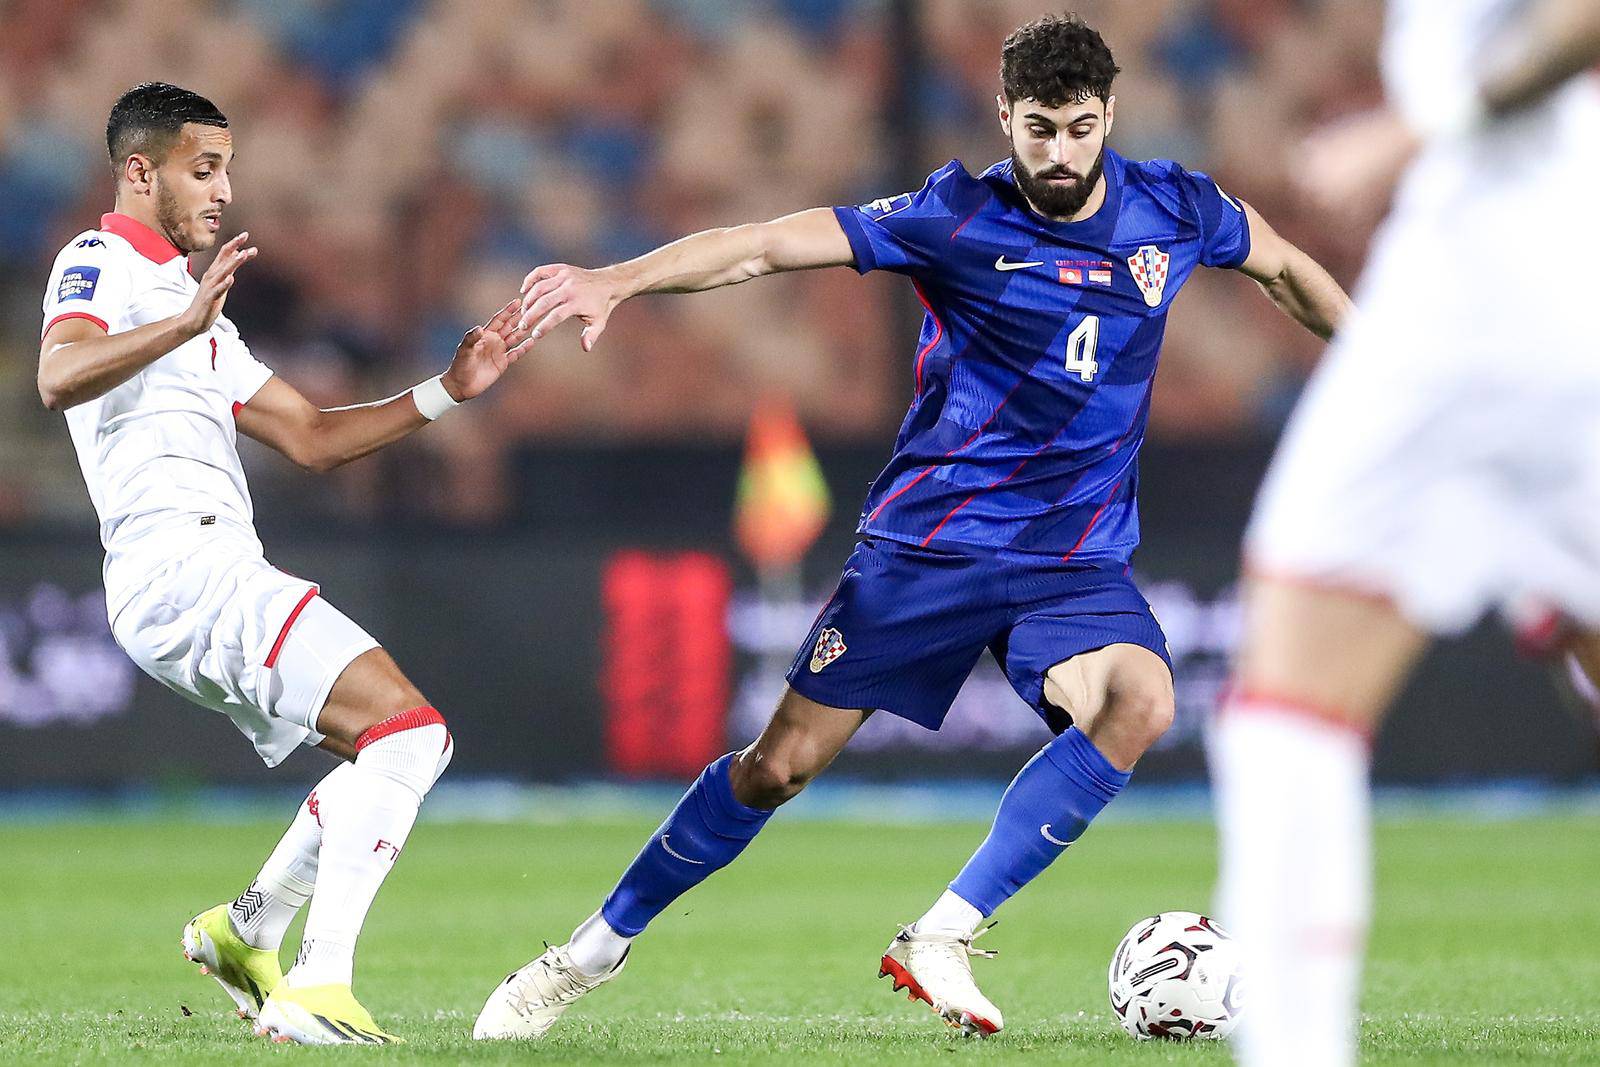 Susret Hrvatske i Tunisa u polufinalu ACUD kupa